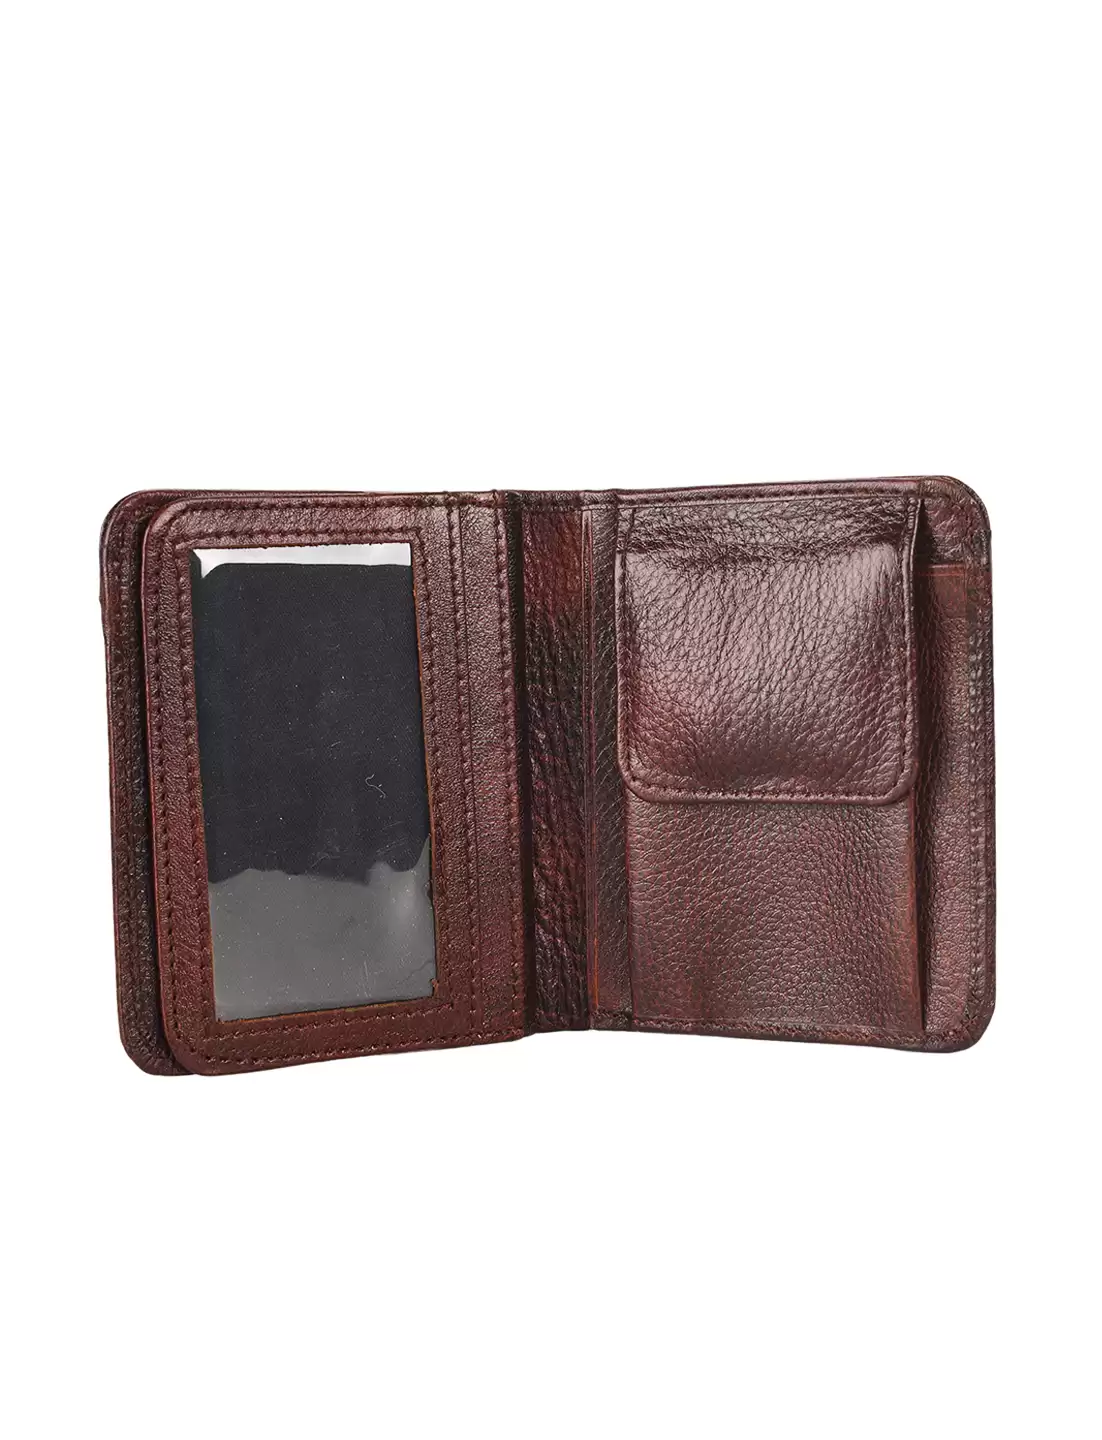 Al Fascino Brown wallet Purse for Men Leather mens Wallets for Men purses  for men Genuine rfid wallet Mens Wallet genuine leather wallet mens wallets  bifold leather wallet men : Amazon.in: Bags,